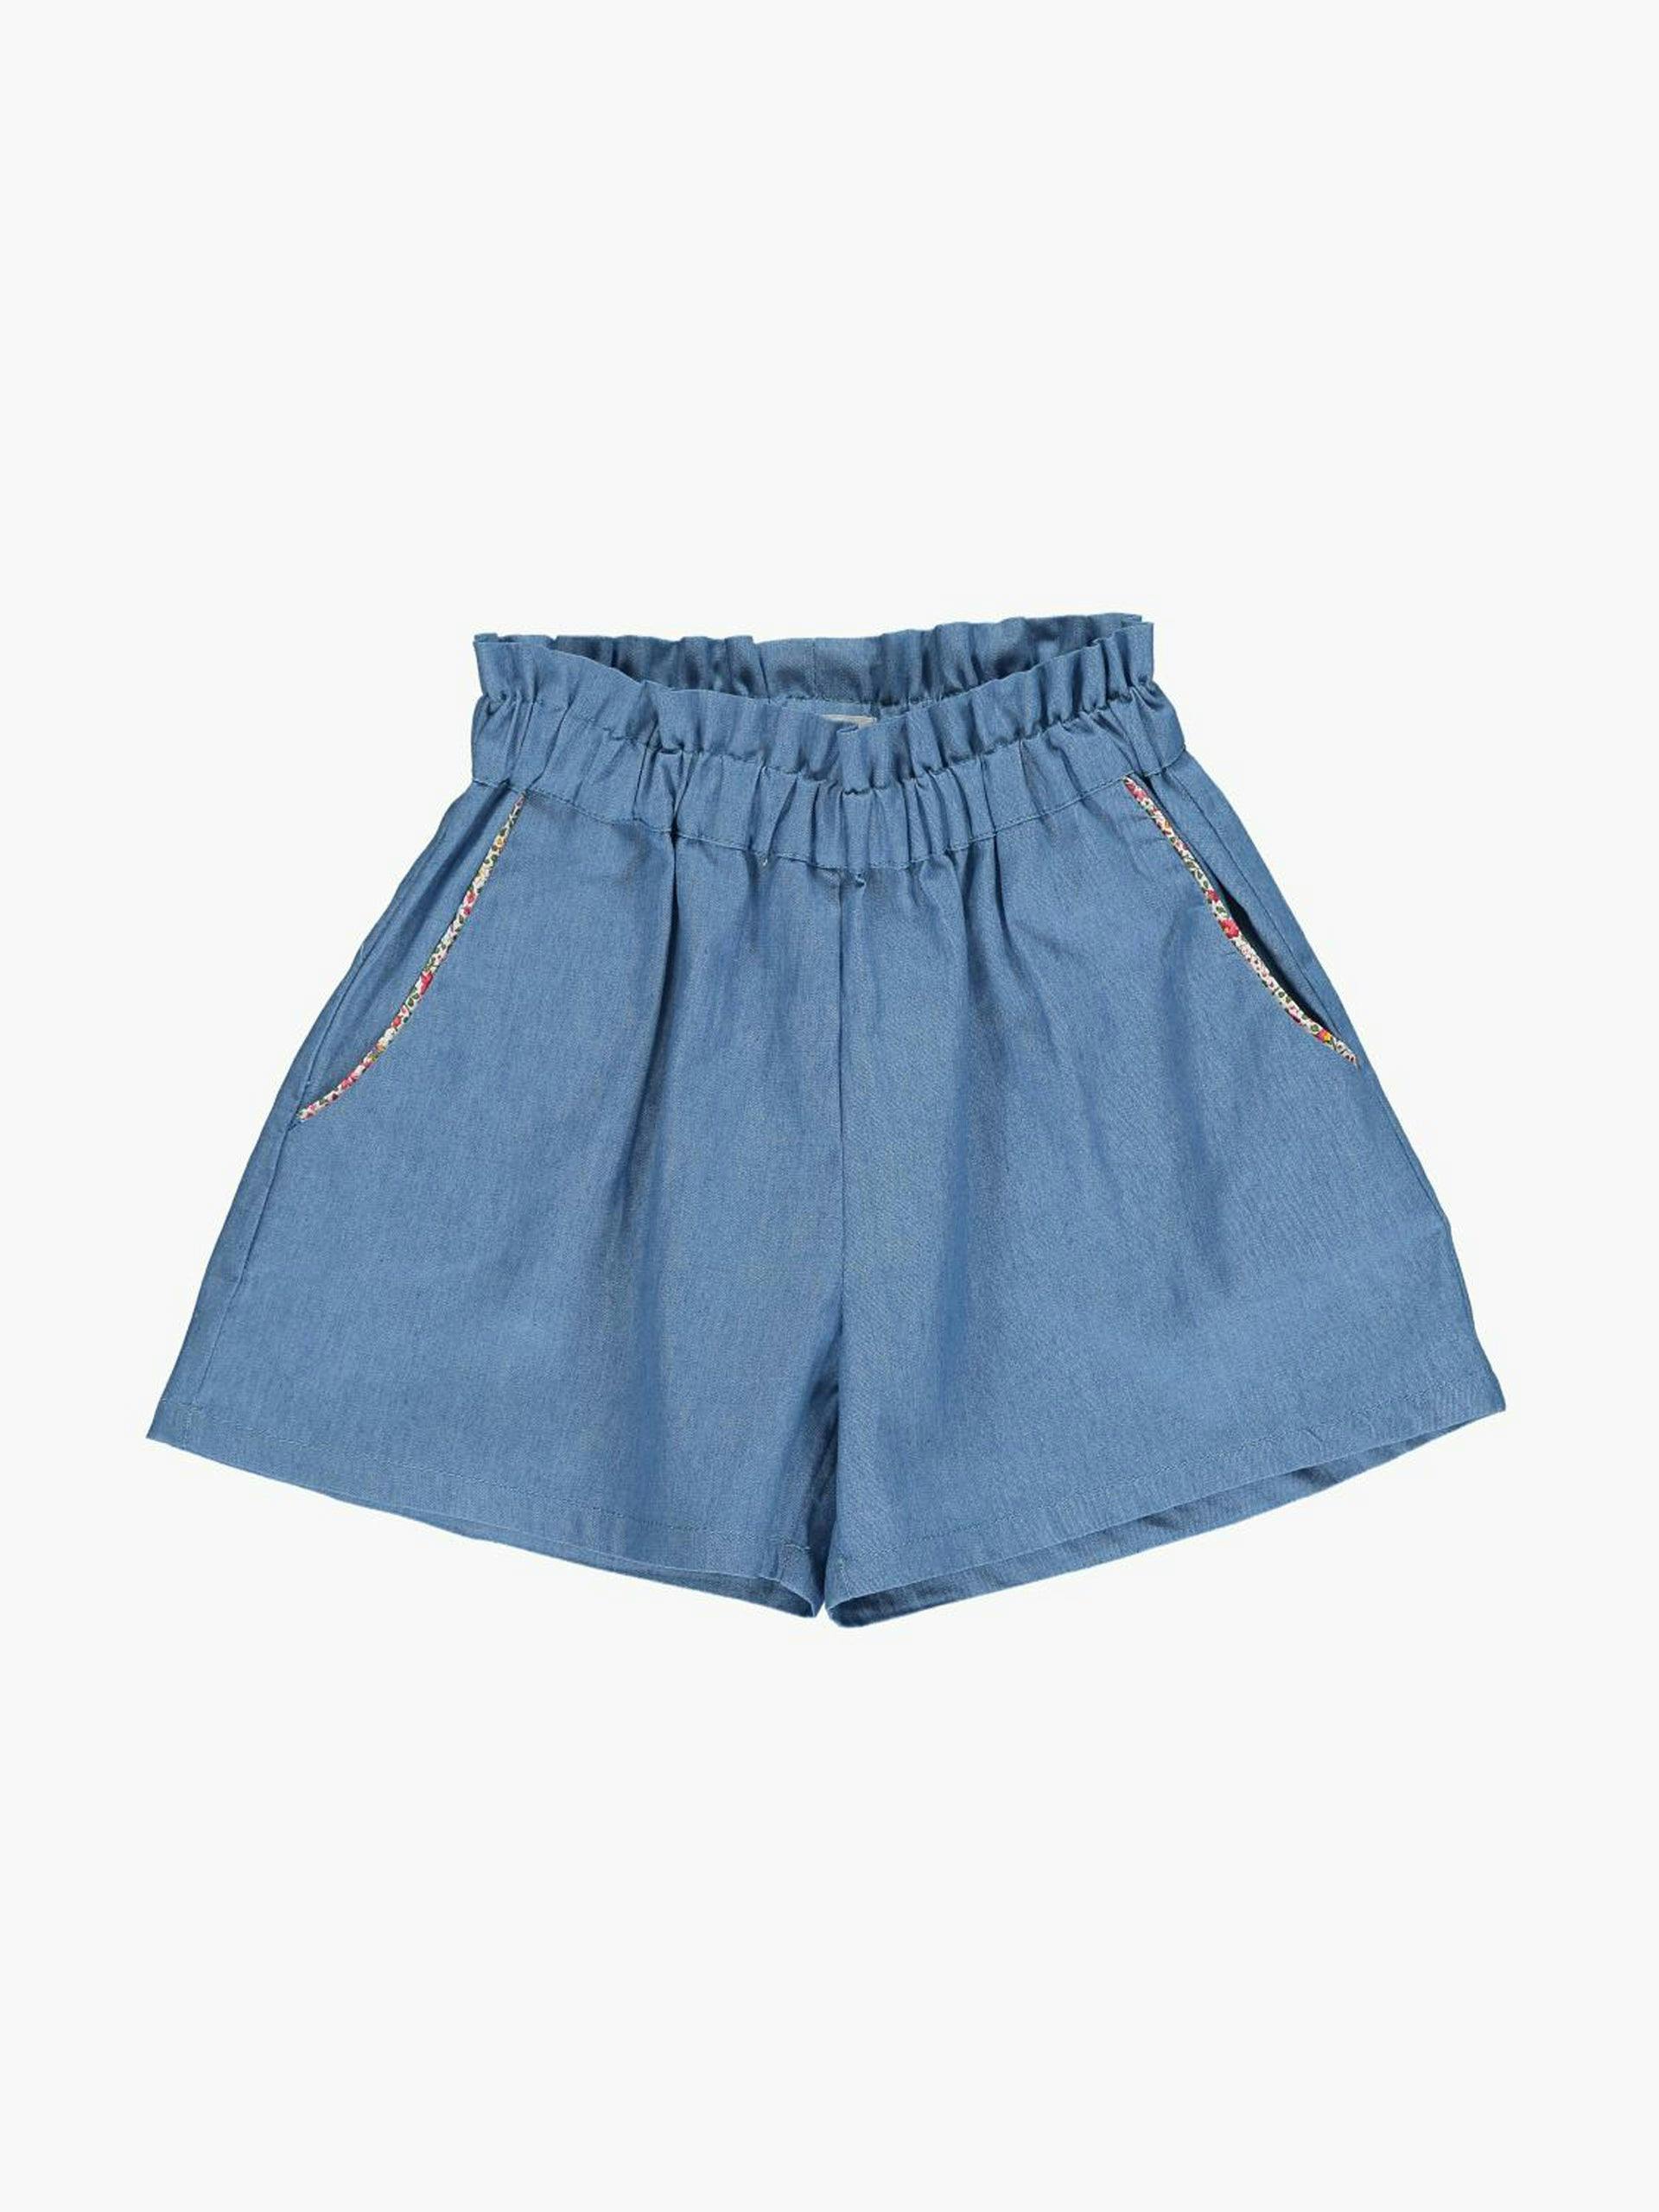 Freesia blue shorts